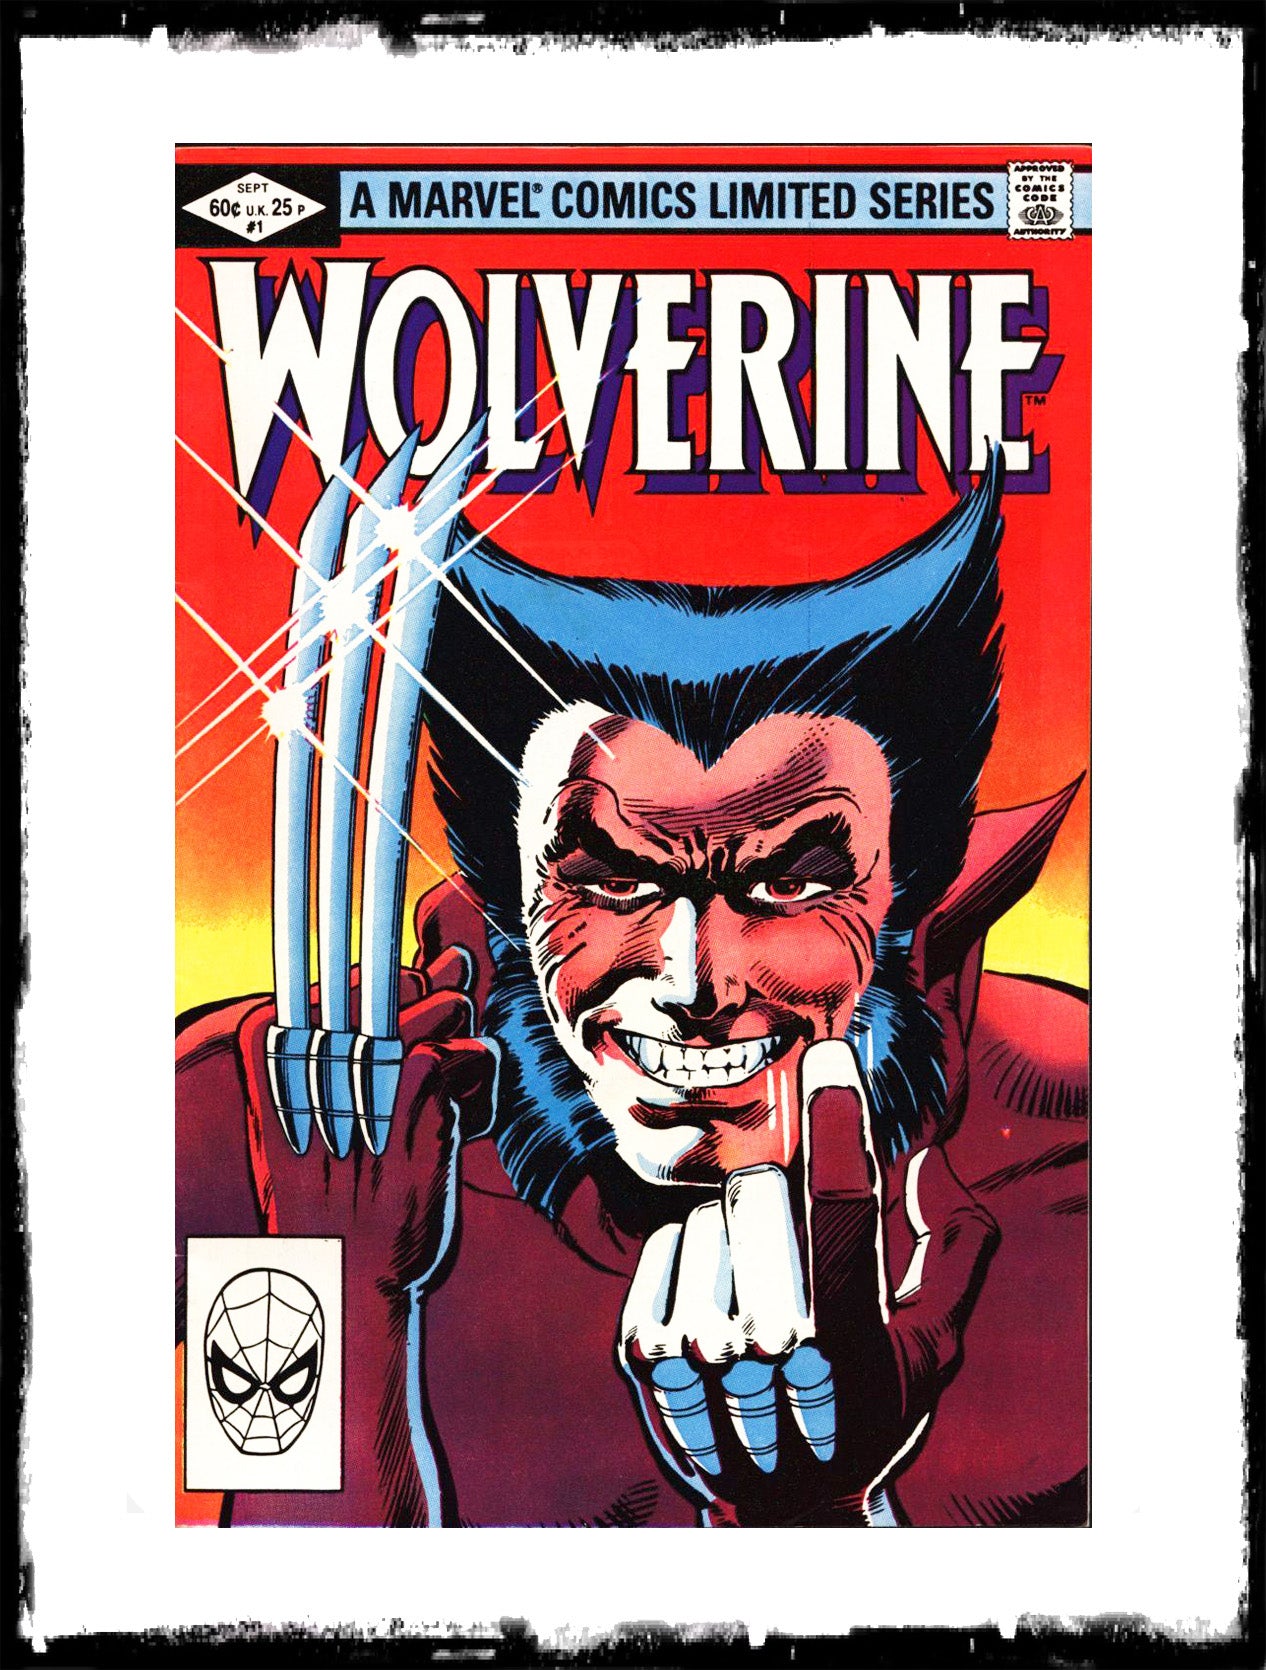 WOLVERINE - #1 1ST SOLO WOLVERINE COMIC (1982 - VF+/NM)